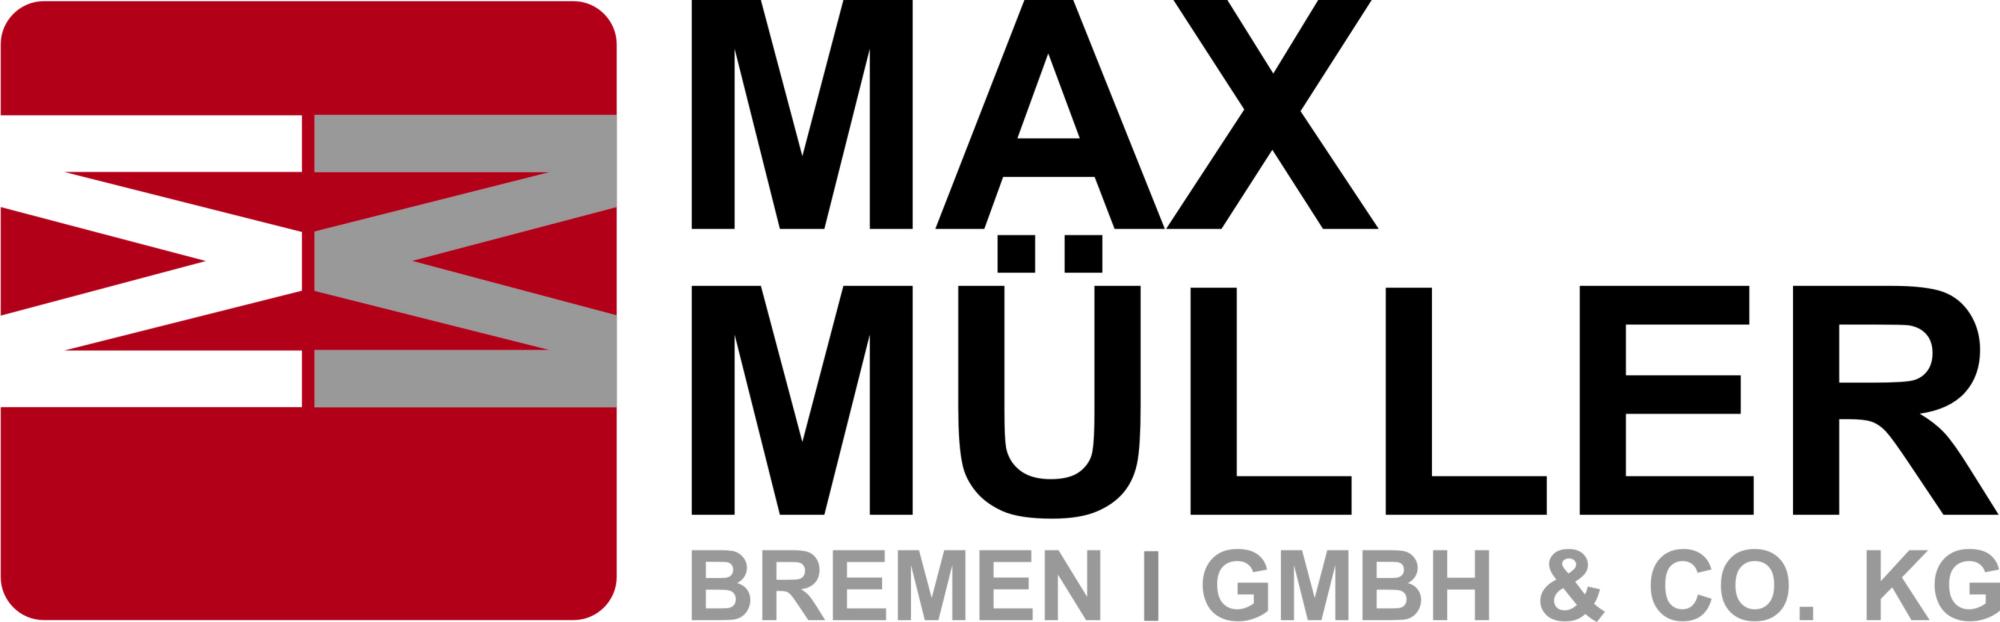 Max Müller Bremen